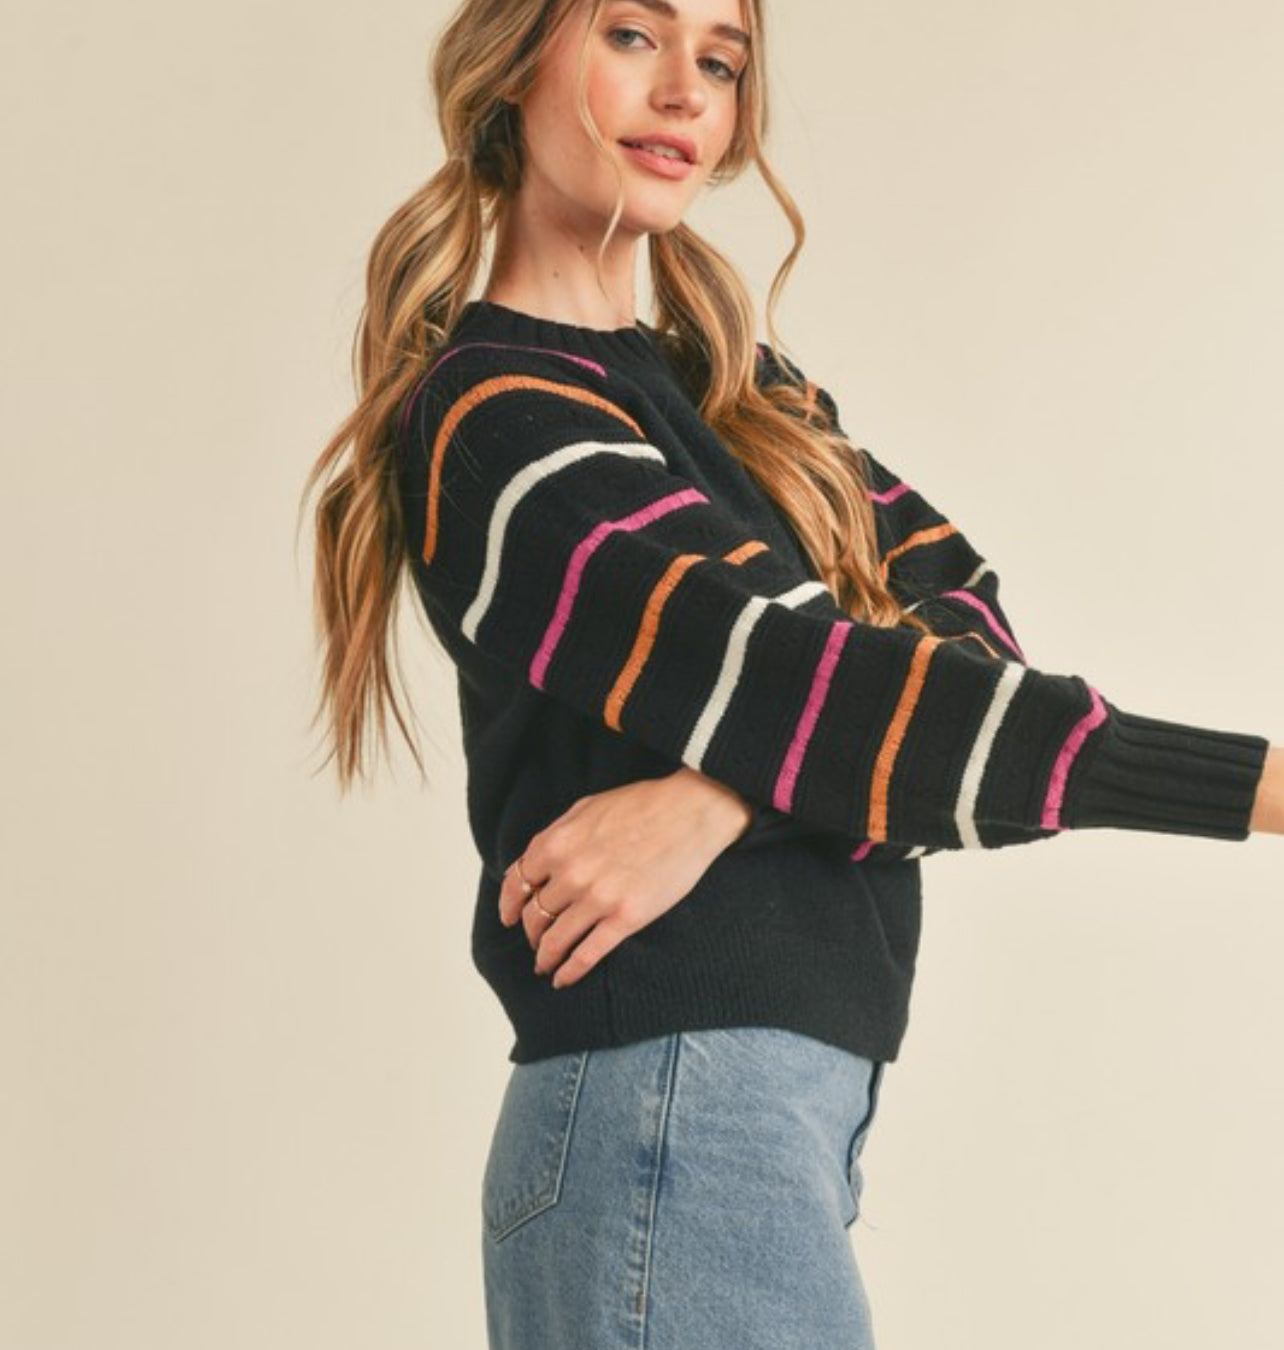 Stripe sleeve sweater